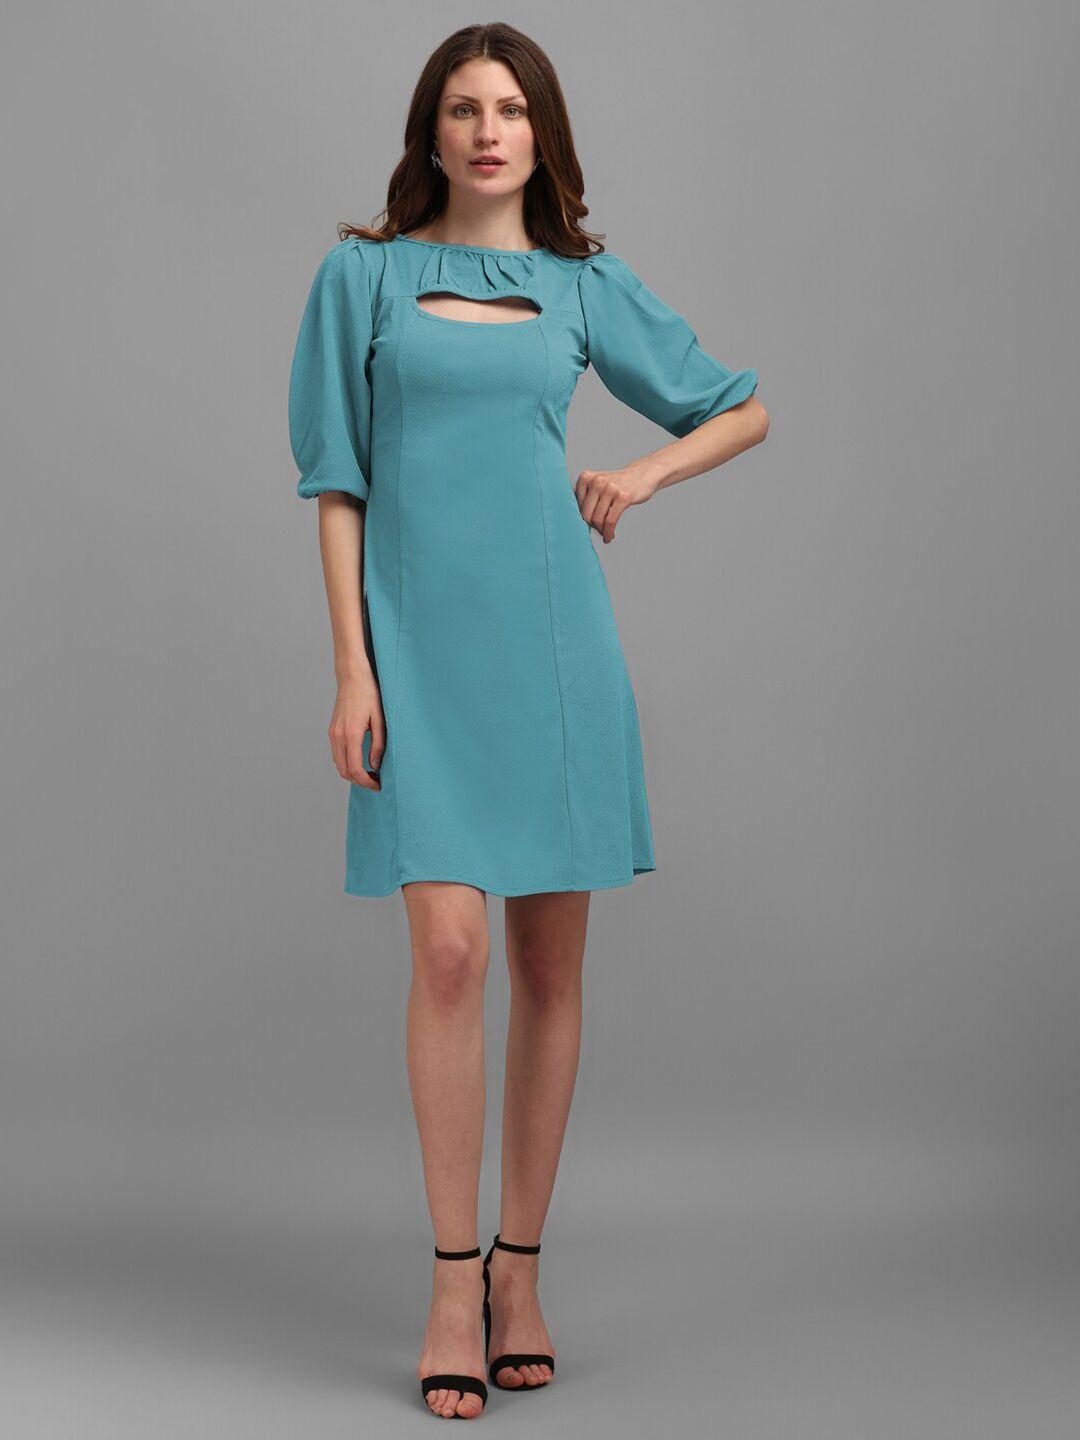 purvaja turquoise blue a-line dress